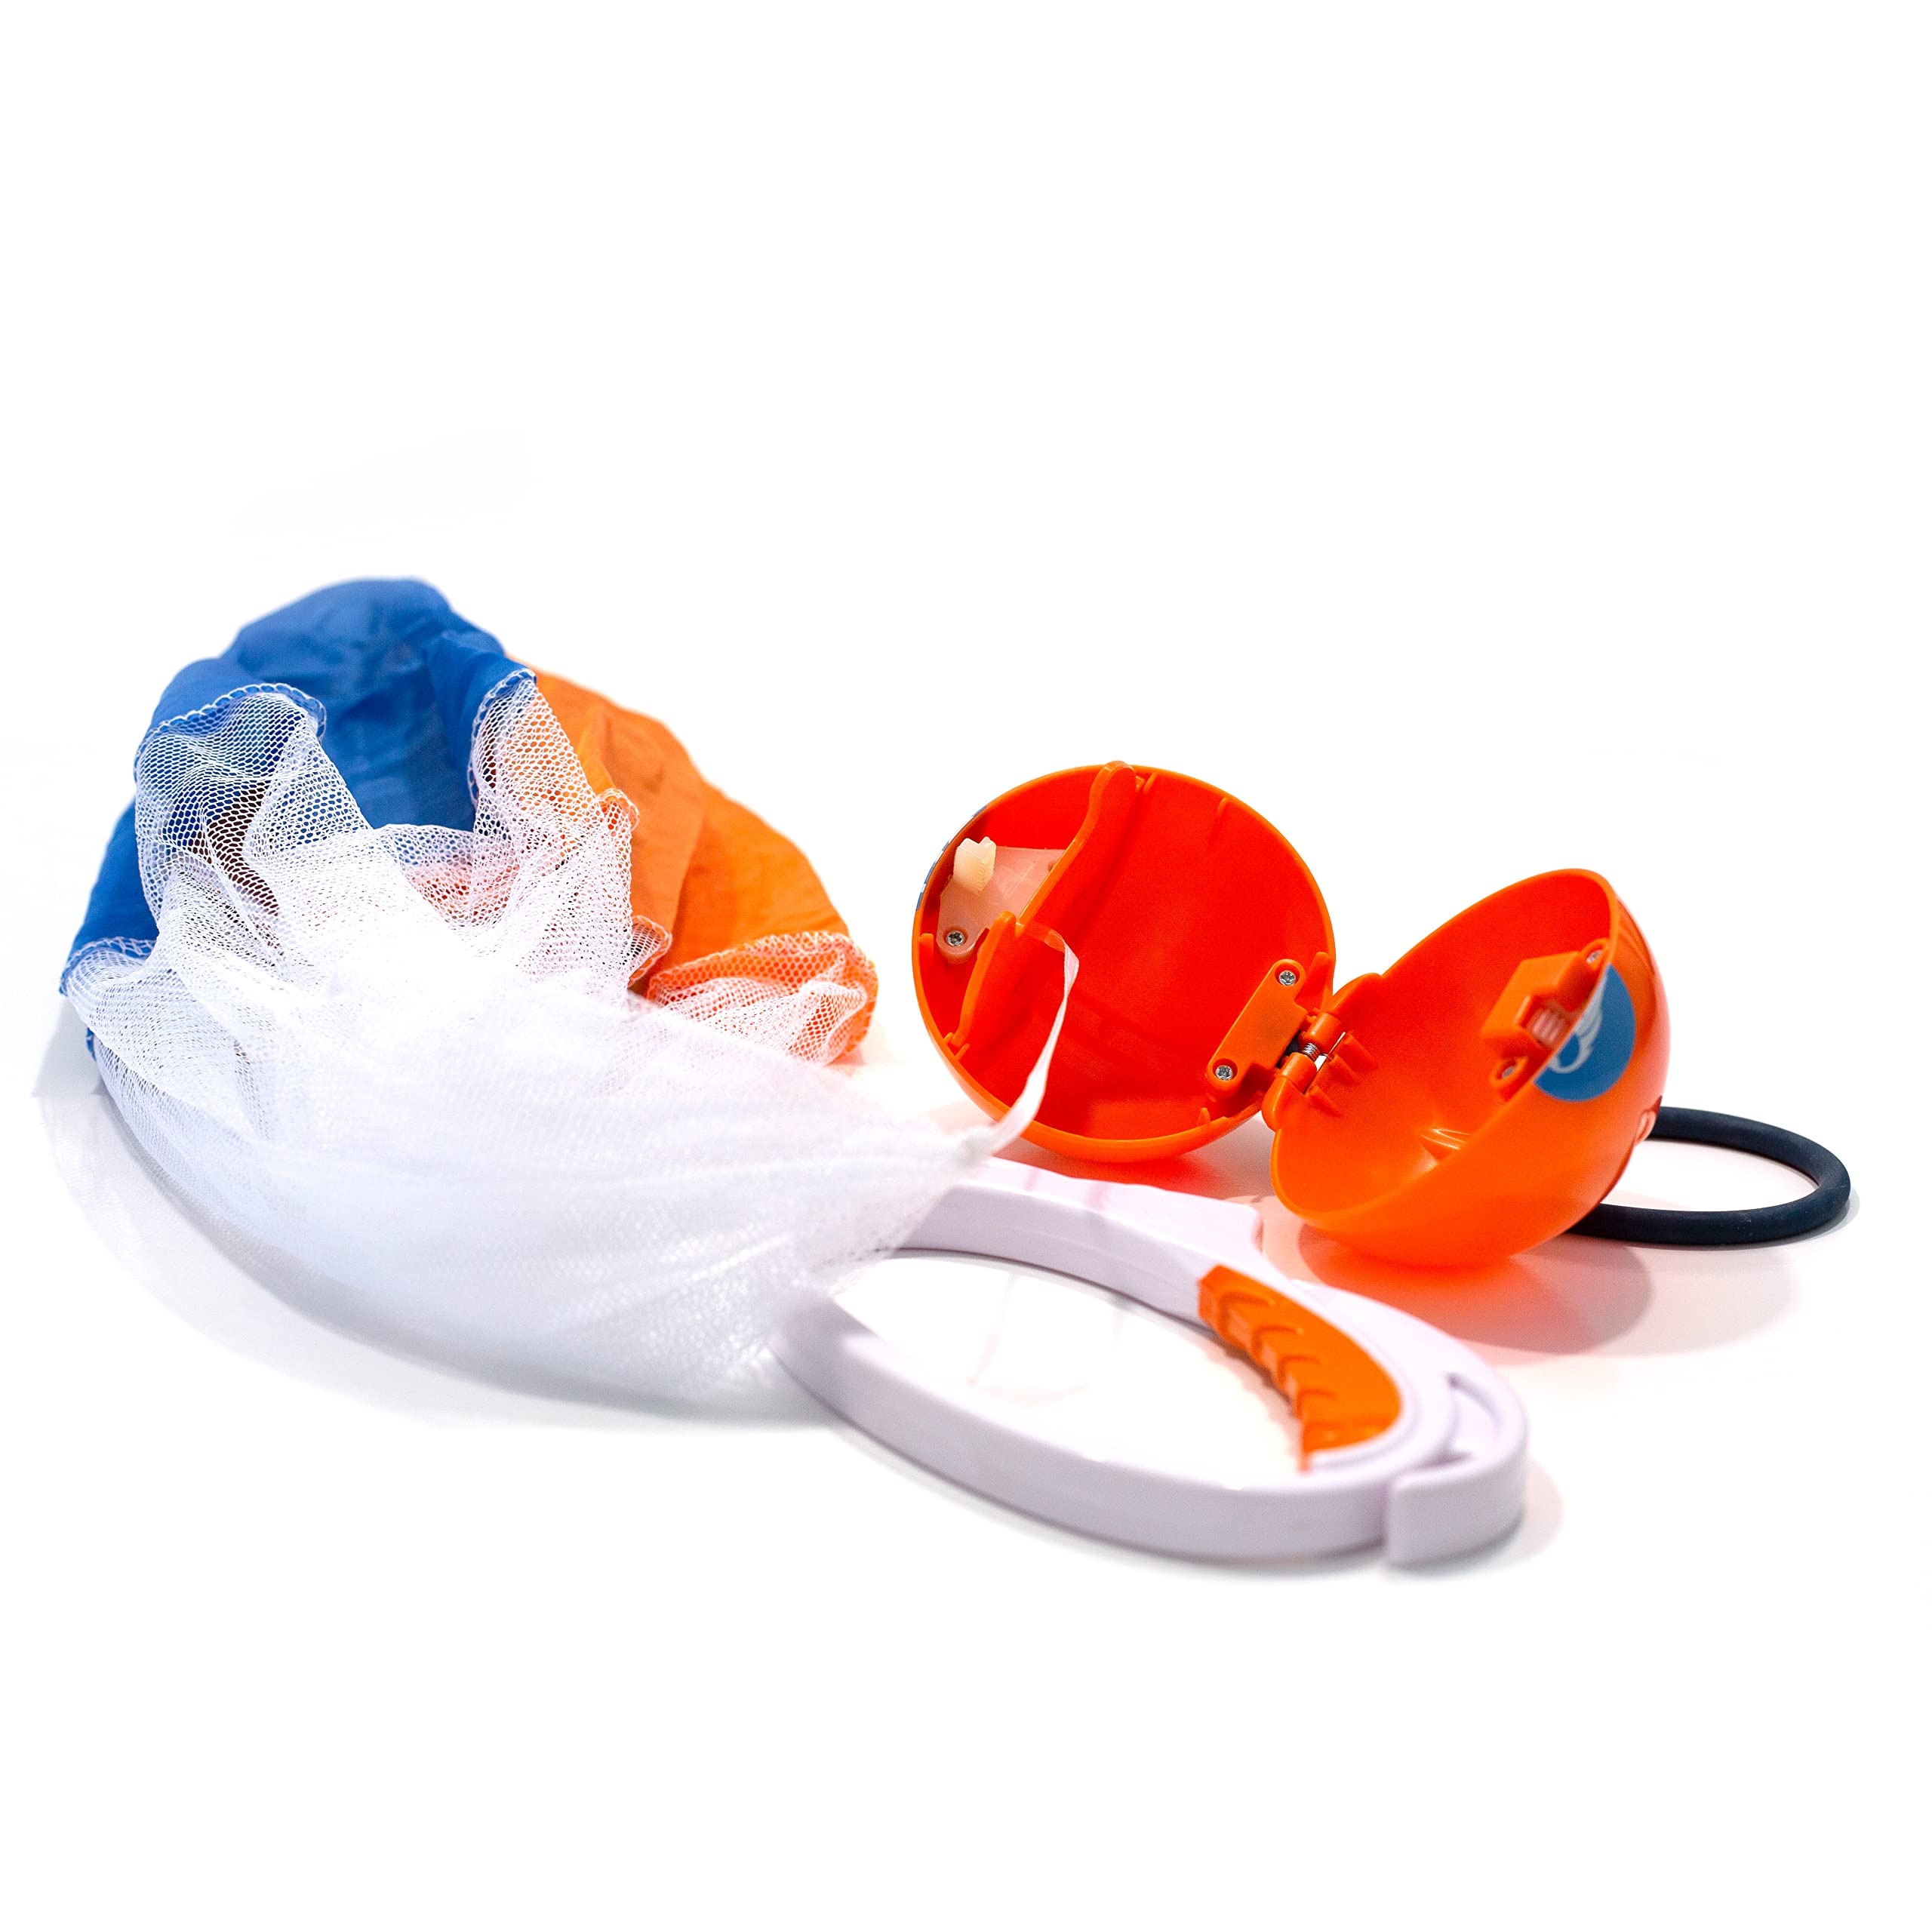 Moonracer 5003 Djubi Parashoot Outdoor Parachute Ball Set, White/Orange